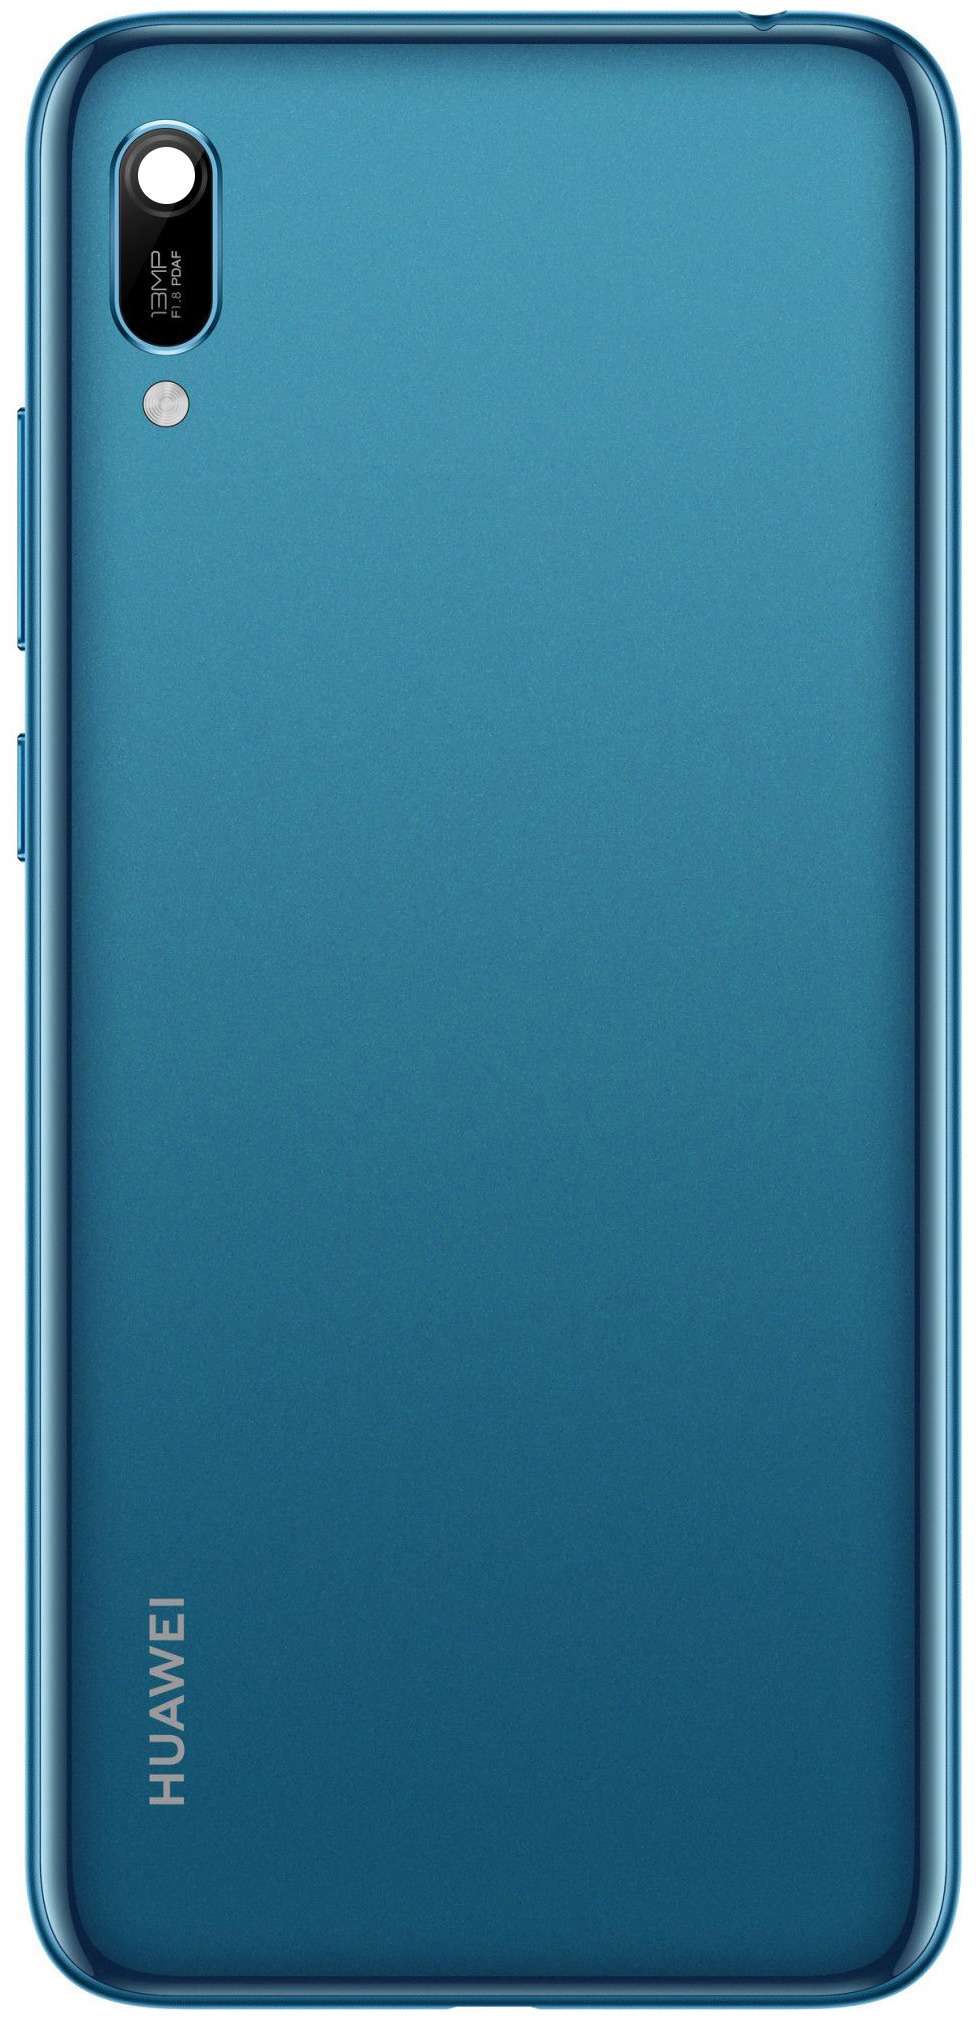 capac-baterie-huawei-y6-pro--282019-29-2C-albastru-